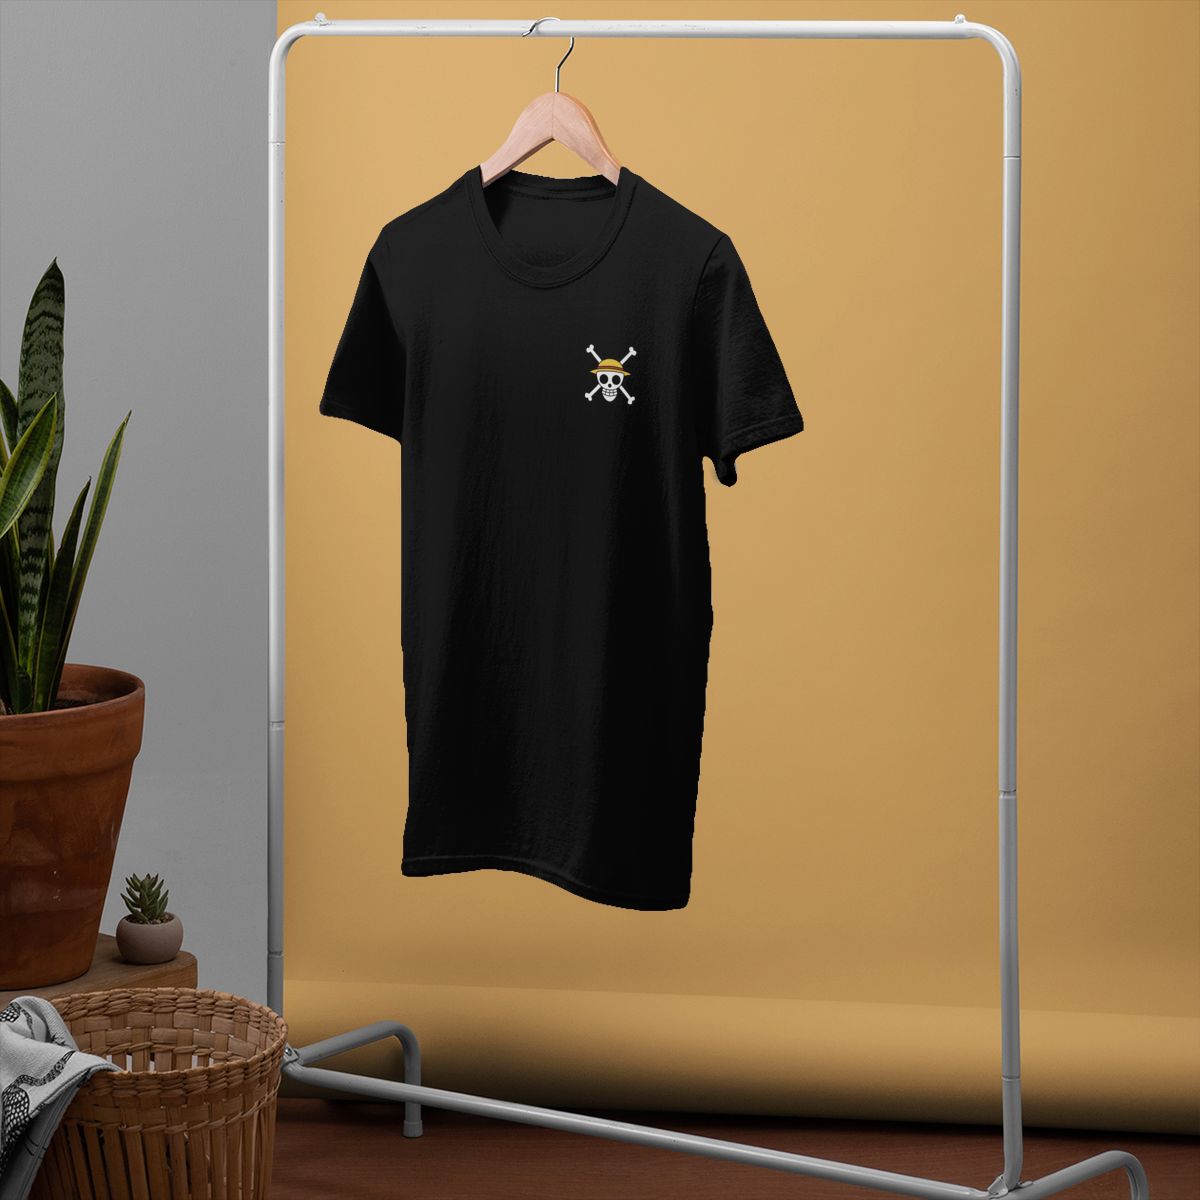 Fairy Tail T Shirt One Piece T-Shirt Classic 100 Cotton Tee Shirt Graphic Short Sleeve Men Cute XXX Tshirt